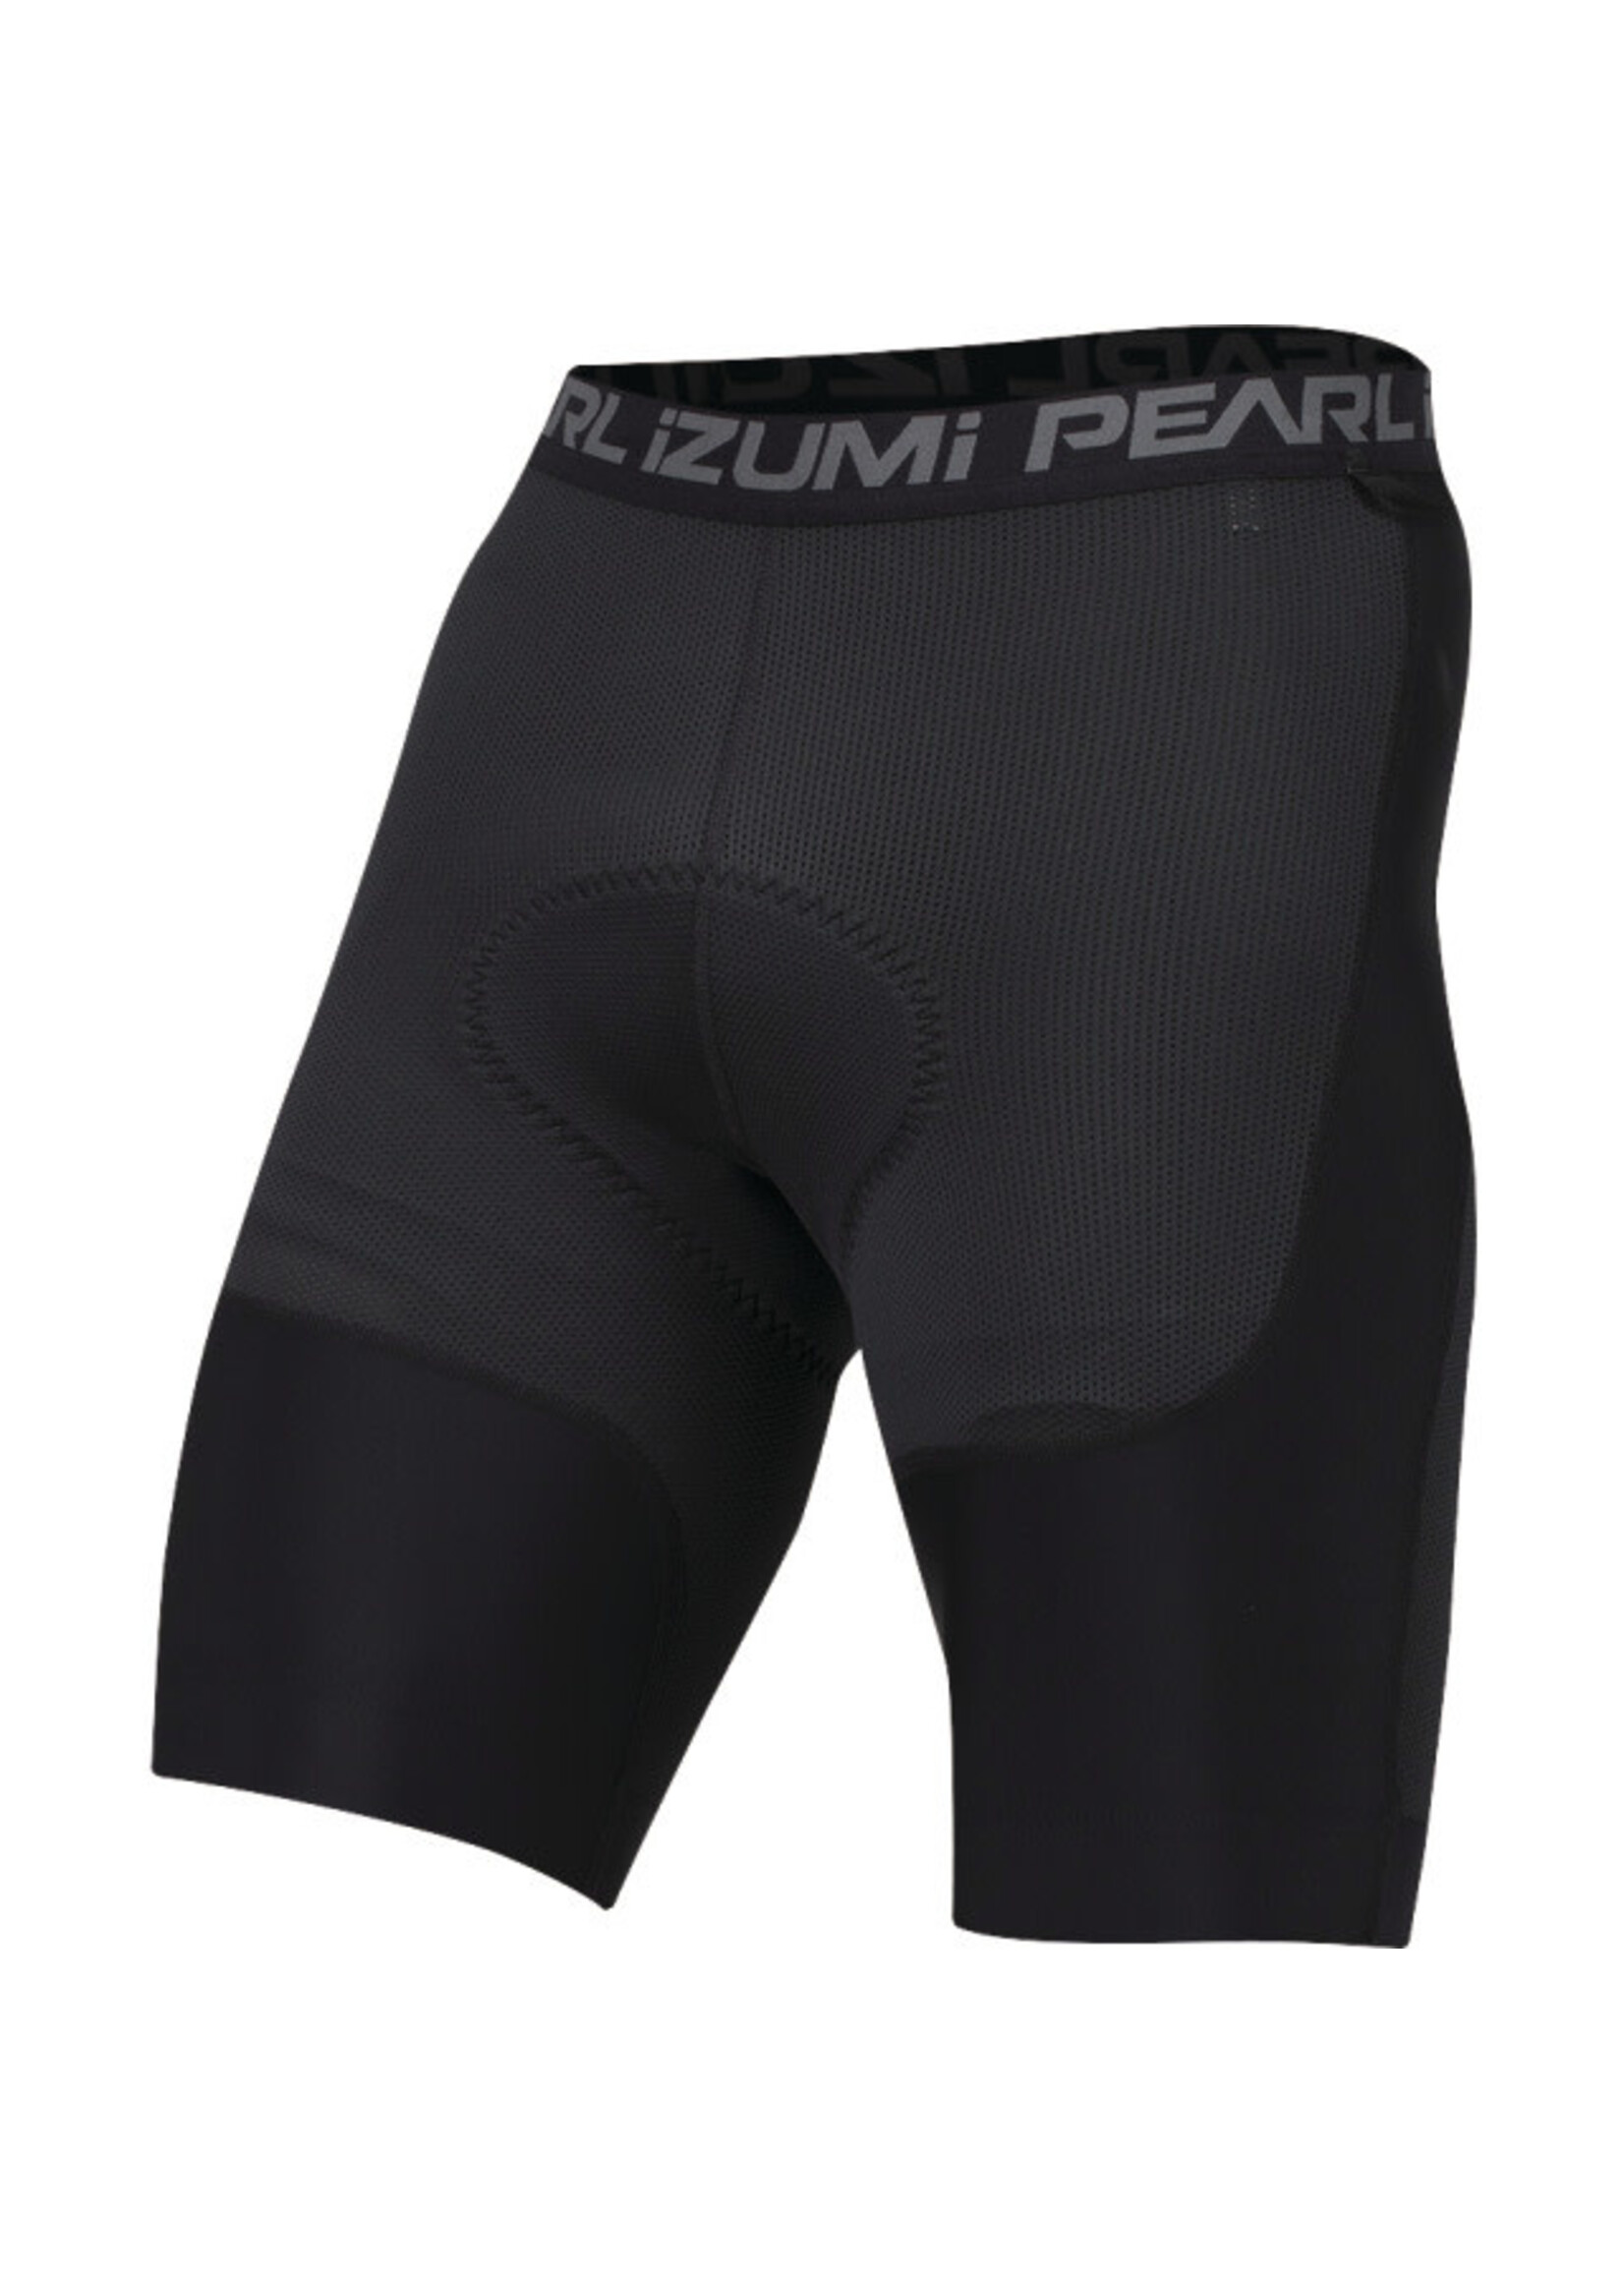 Pearl iZUMi SELECT Liner Short black